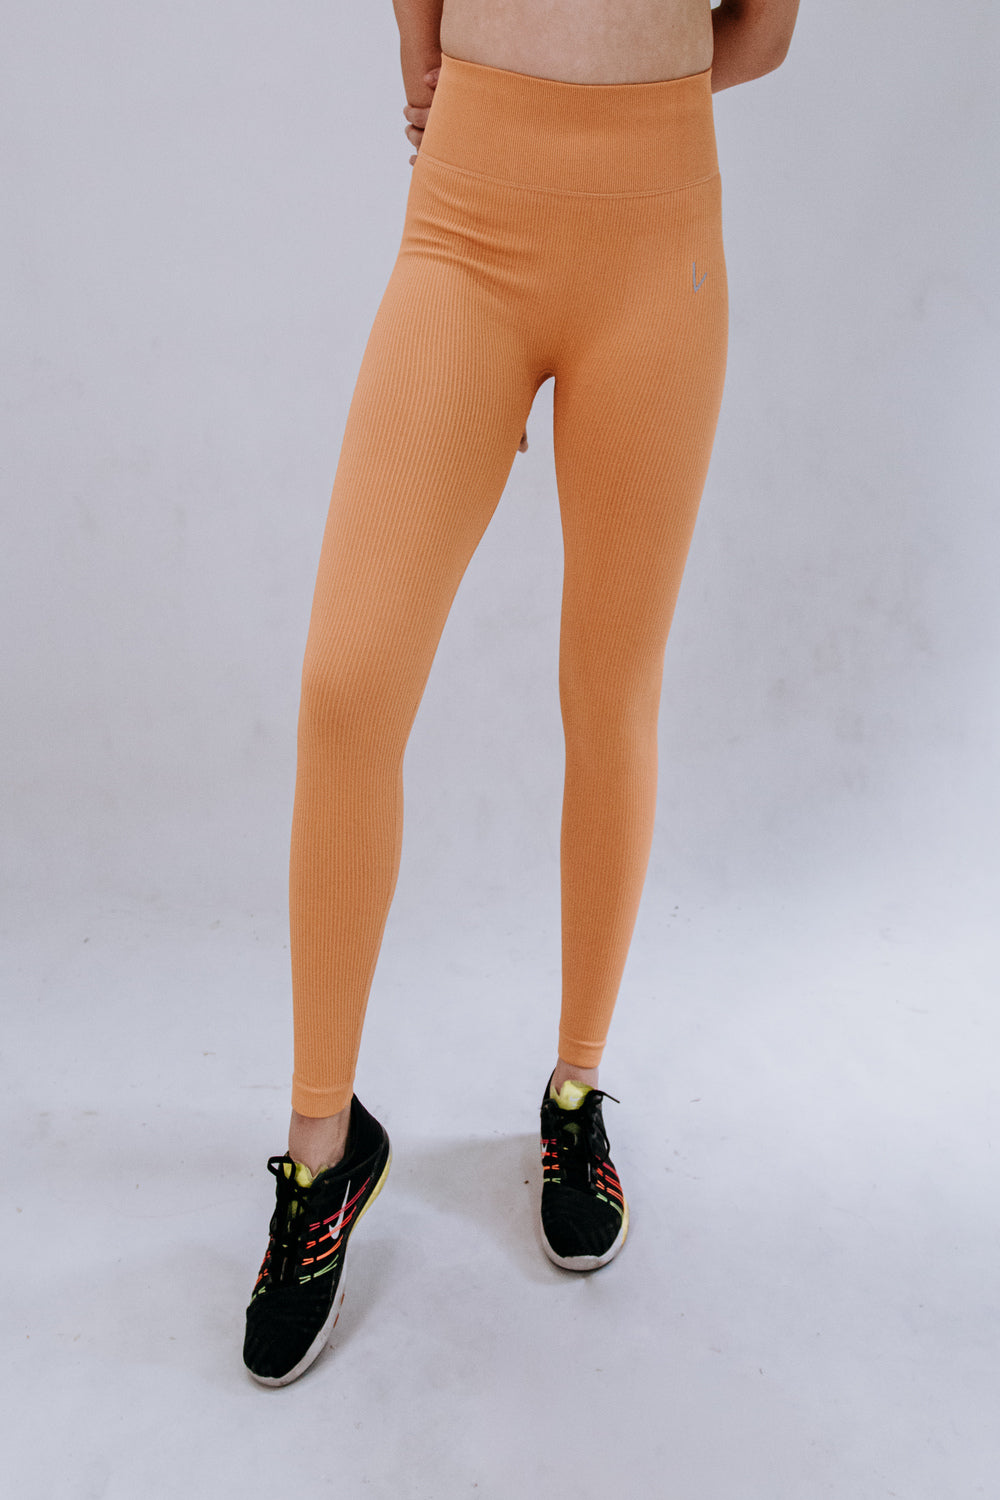 Albino Python Tall Leggings | High Waisted Yoga Pants | Patterned Leggings  – bootysculpted